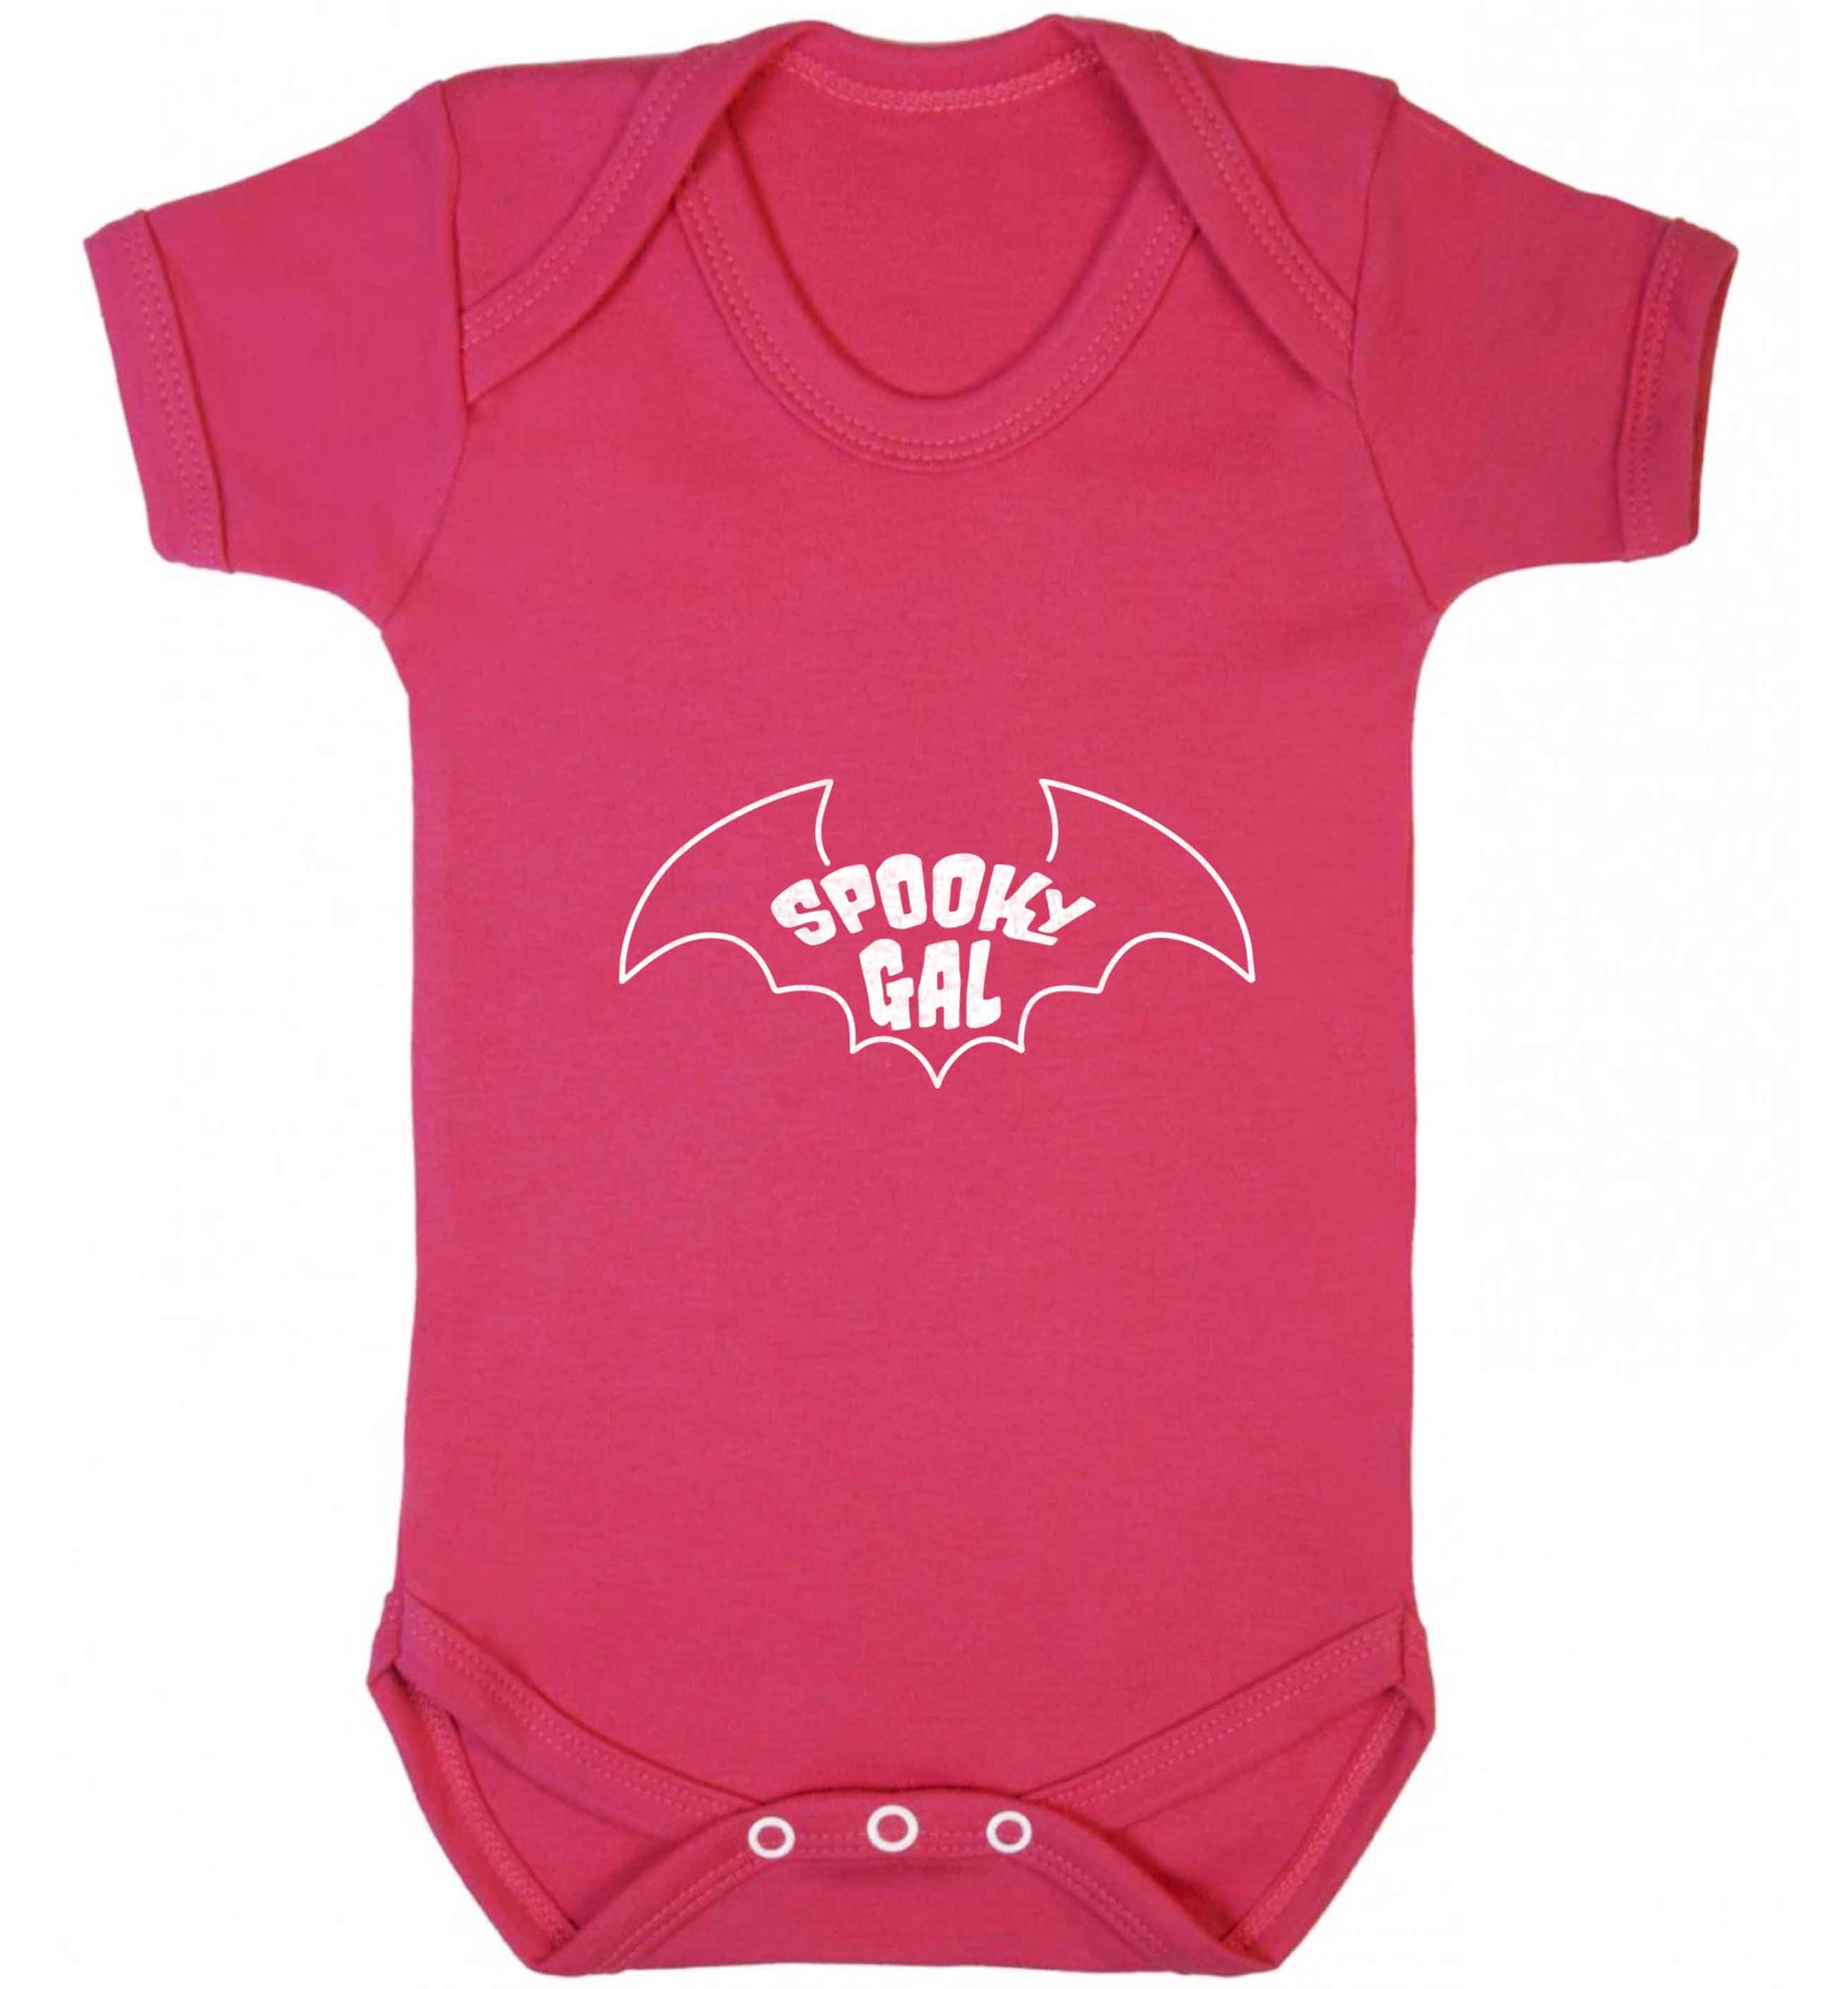 Spooky gal Kit baby vest dark pink 18-24 months